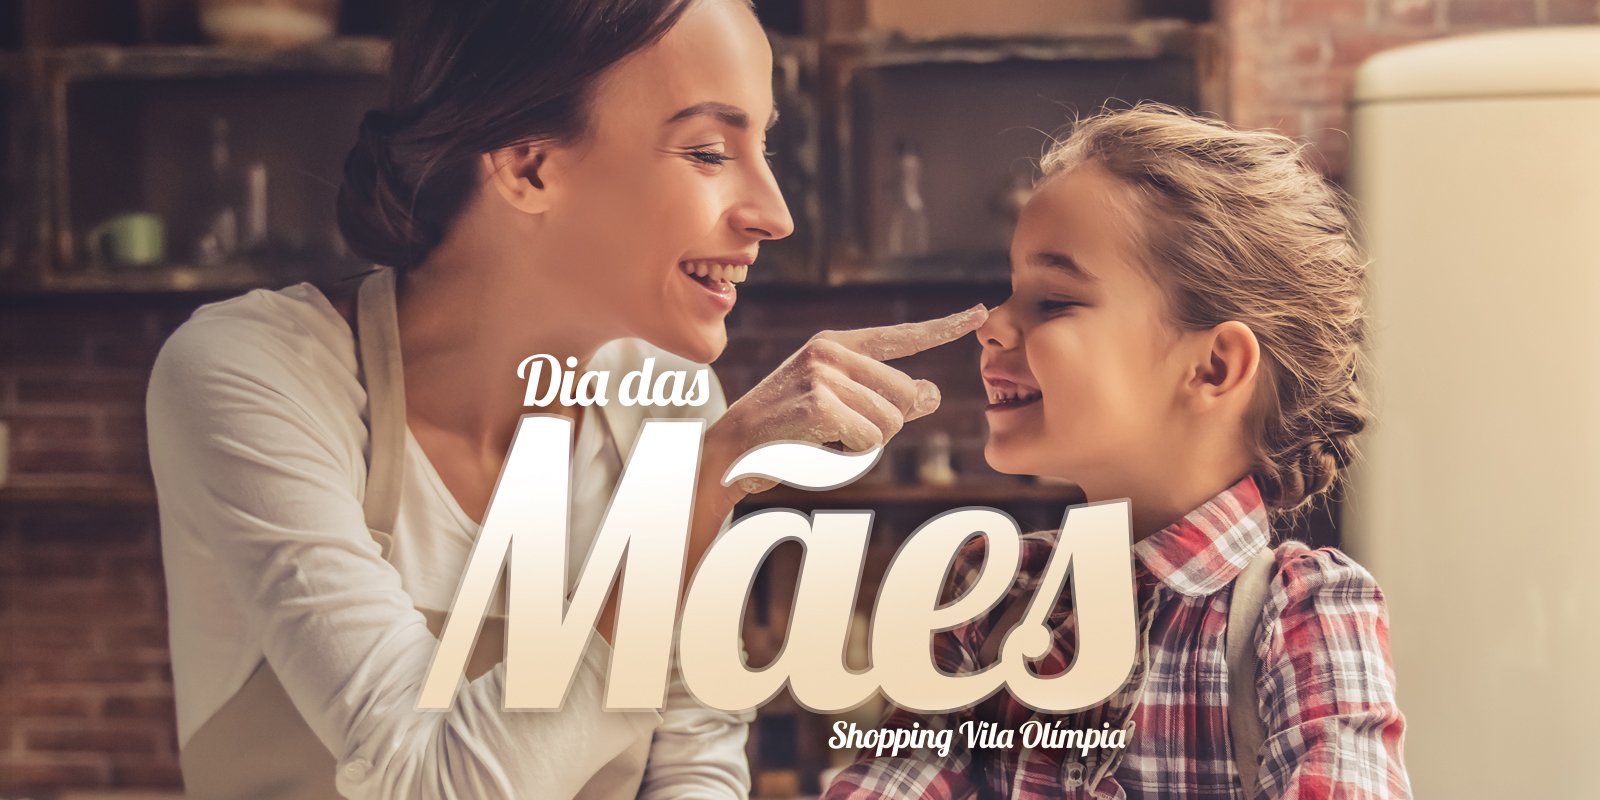 Featured image for “Dia das Mães2017”